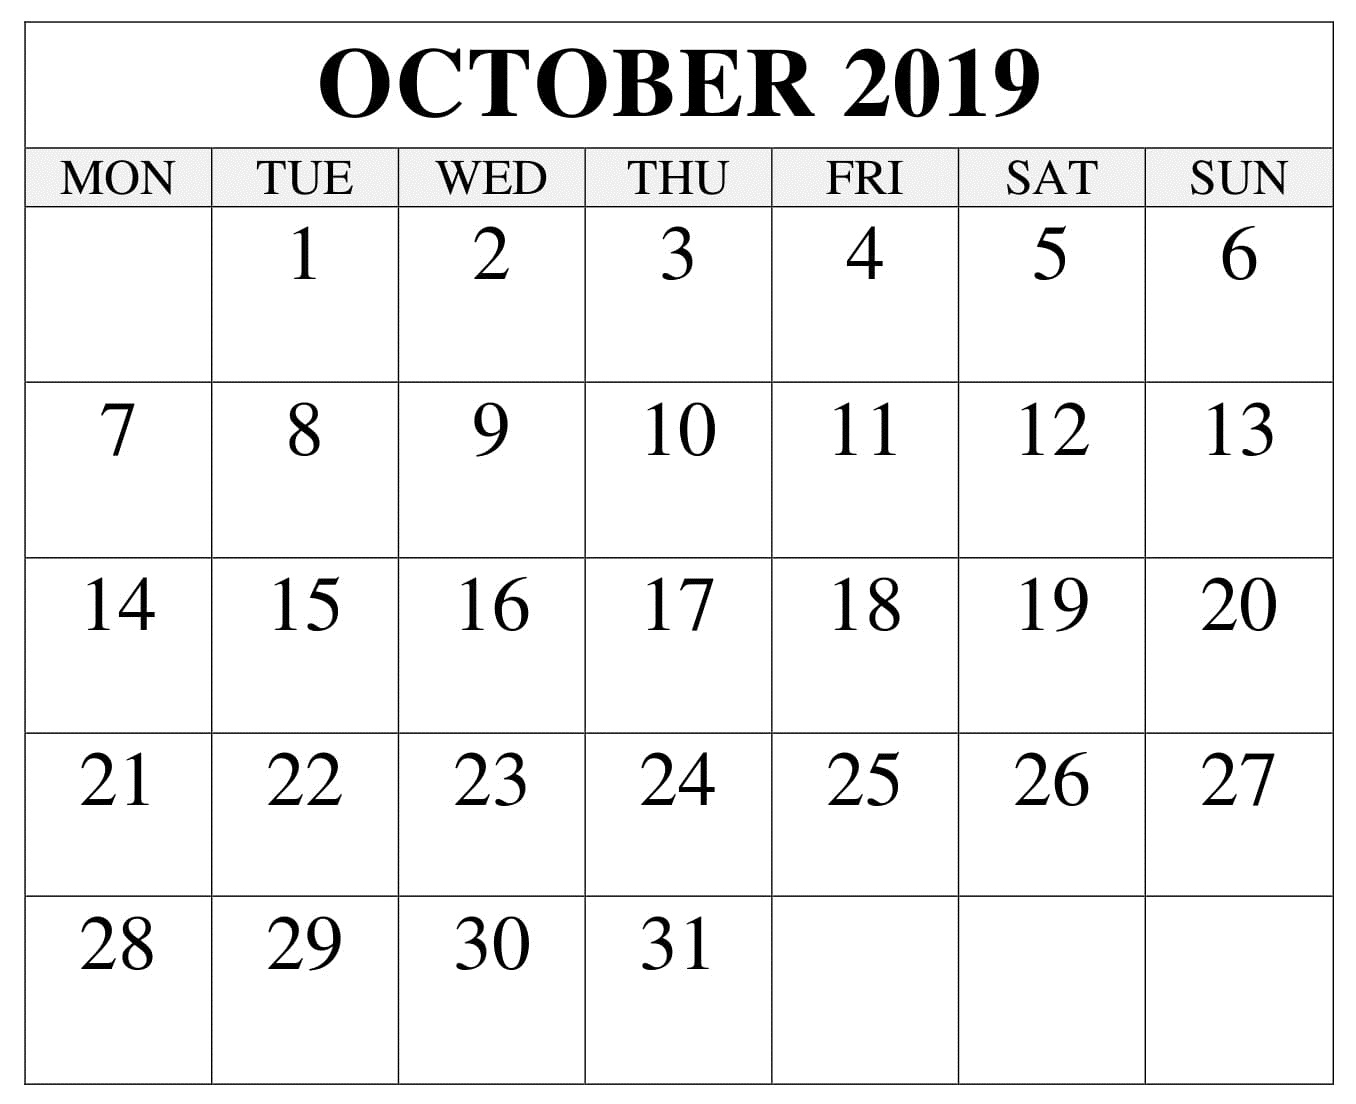 October 2019 Calendar Template Word , Excel - Latest